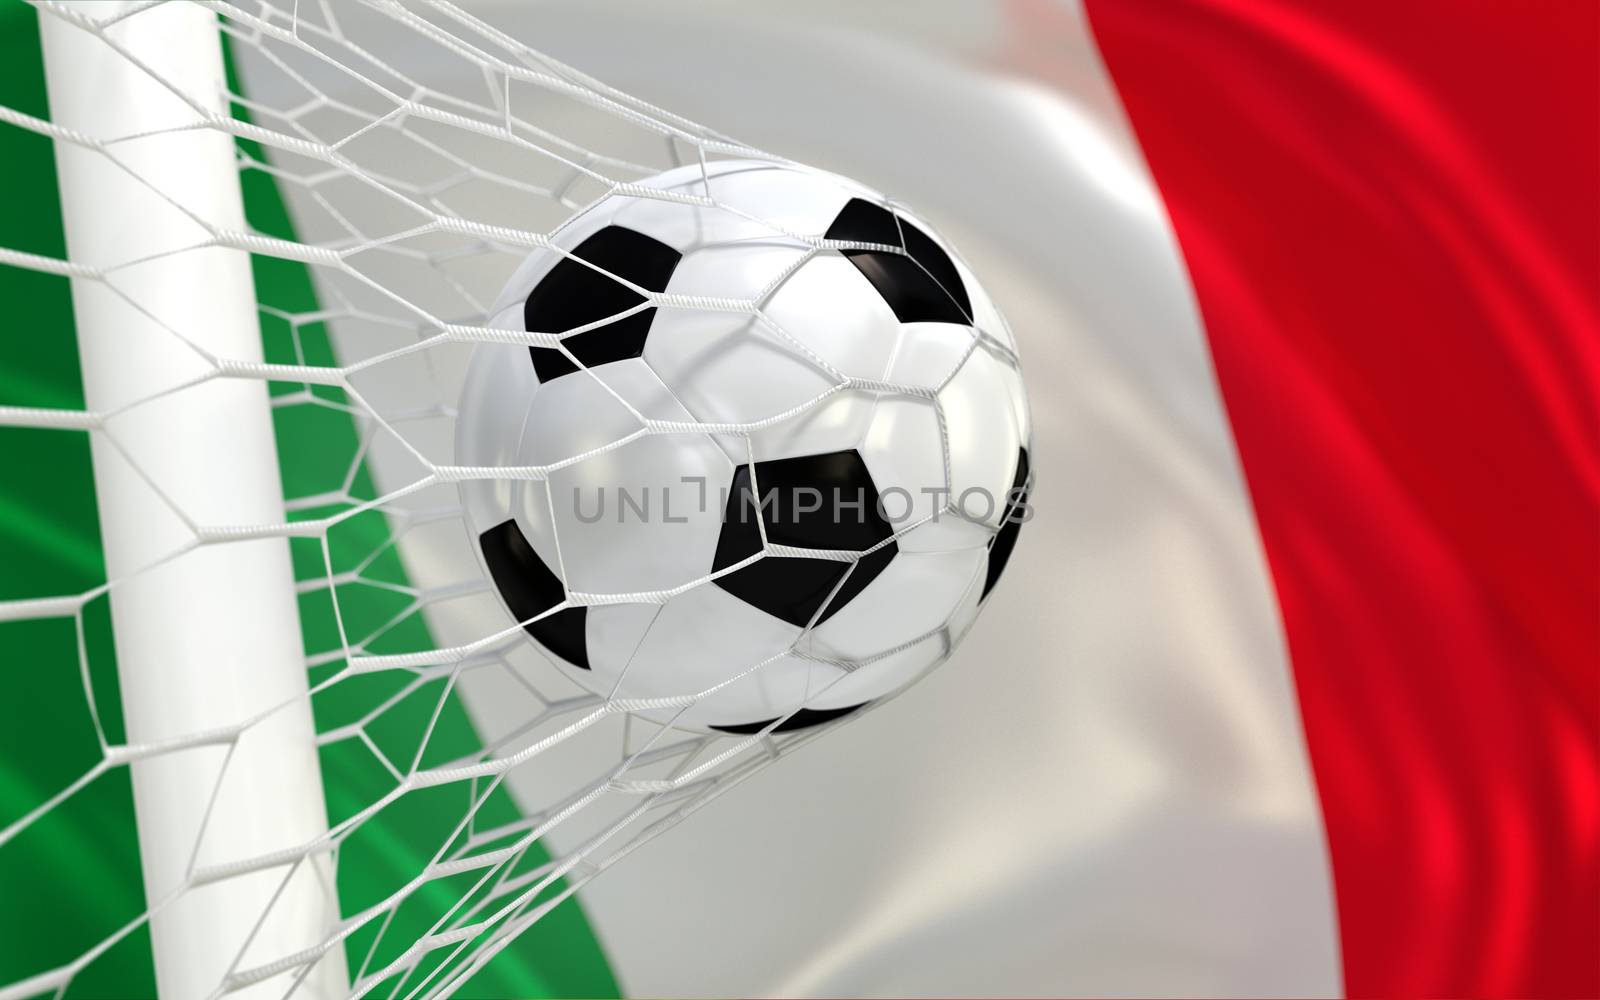 Italy flag and soccer ball, football in goal net